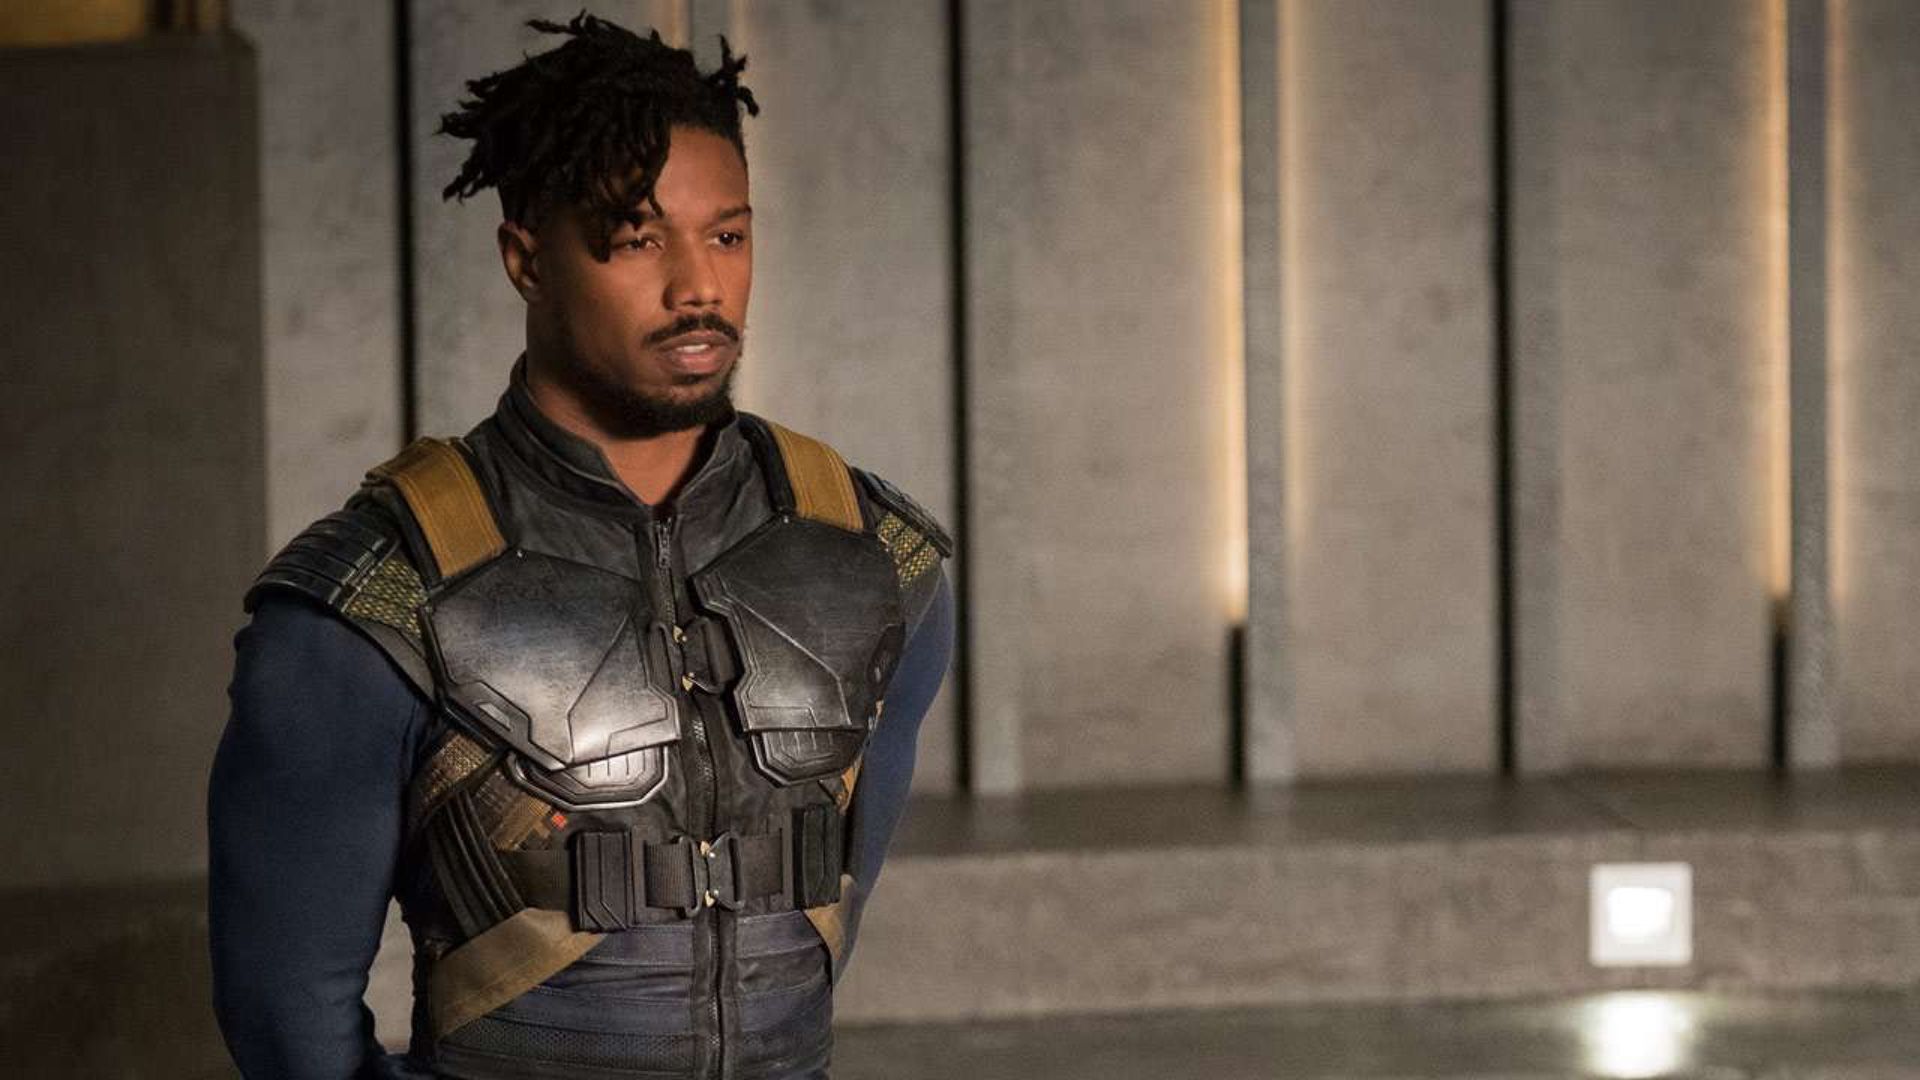 Michael B. Jordan says returning for 'Black Panther 2' will